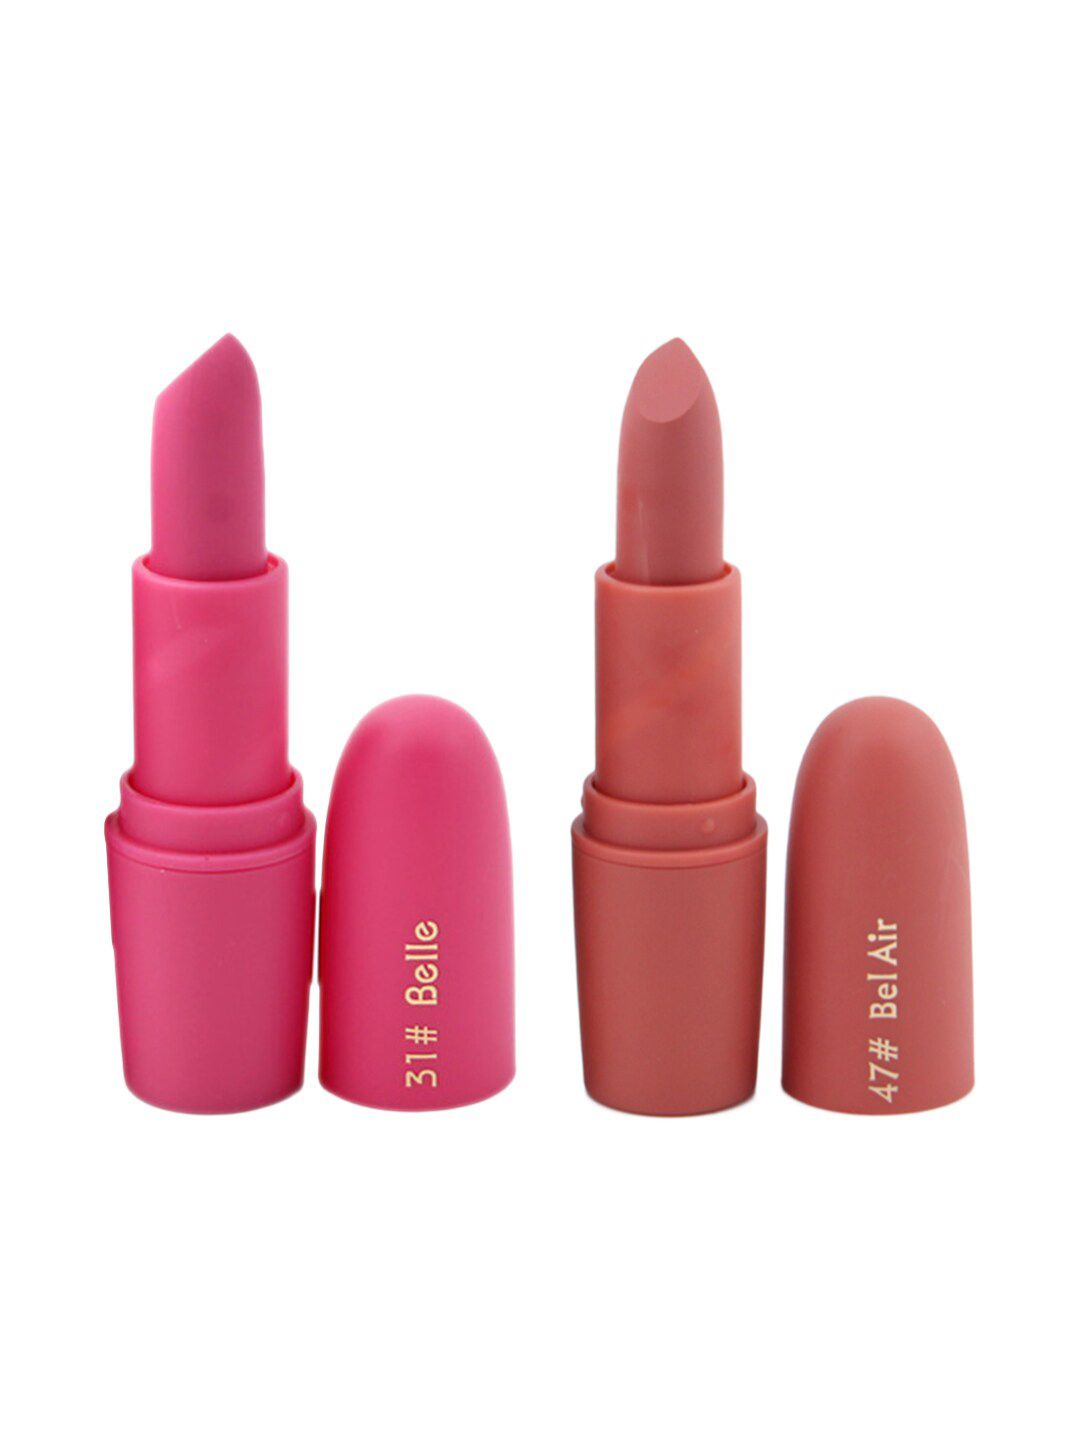 MISS ROSE Professional Make-Up Set of 2 Matte Creamy Lipsticks - Belle 31 & Bel Air 47 Price in India